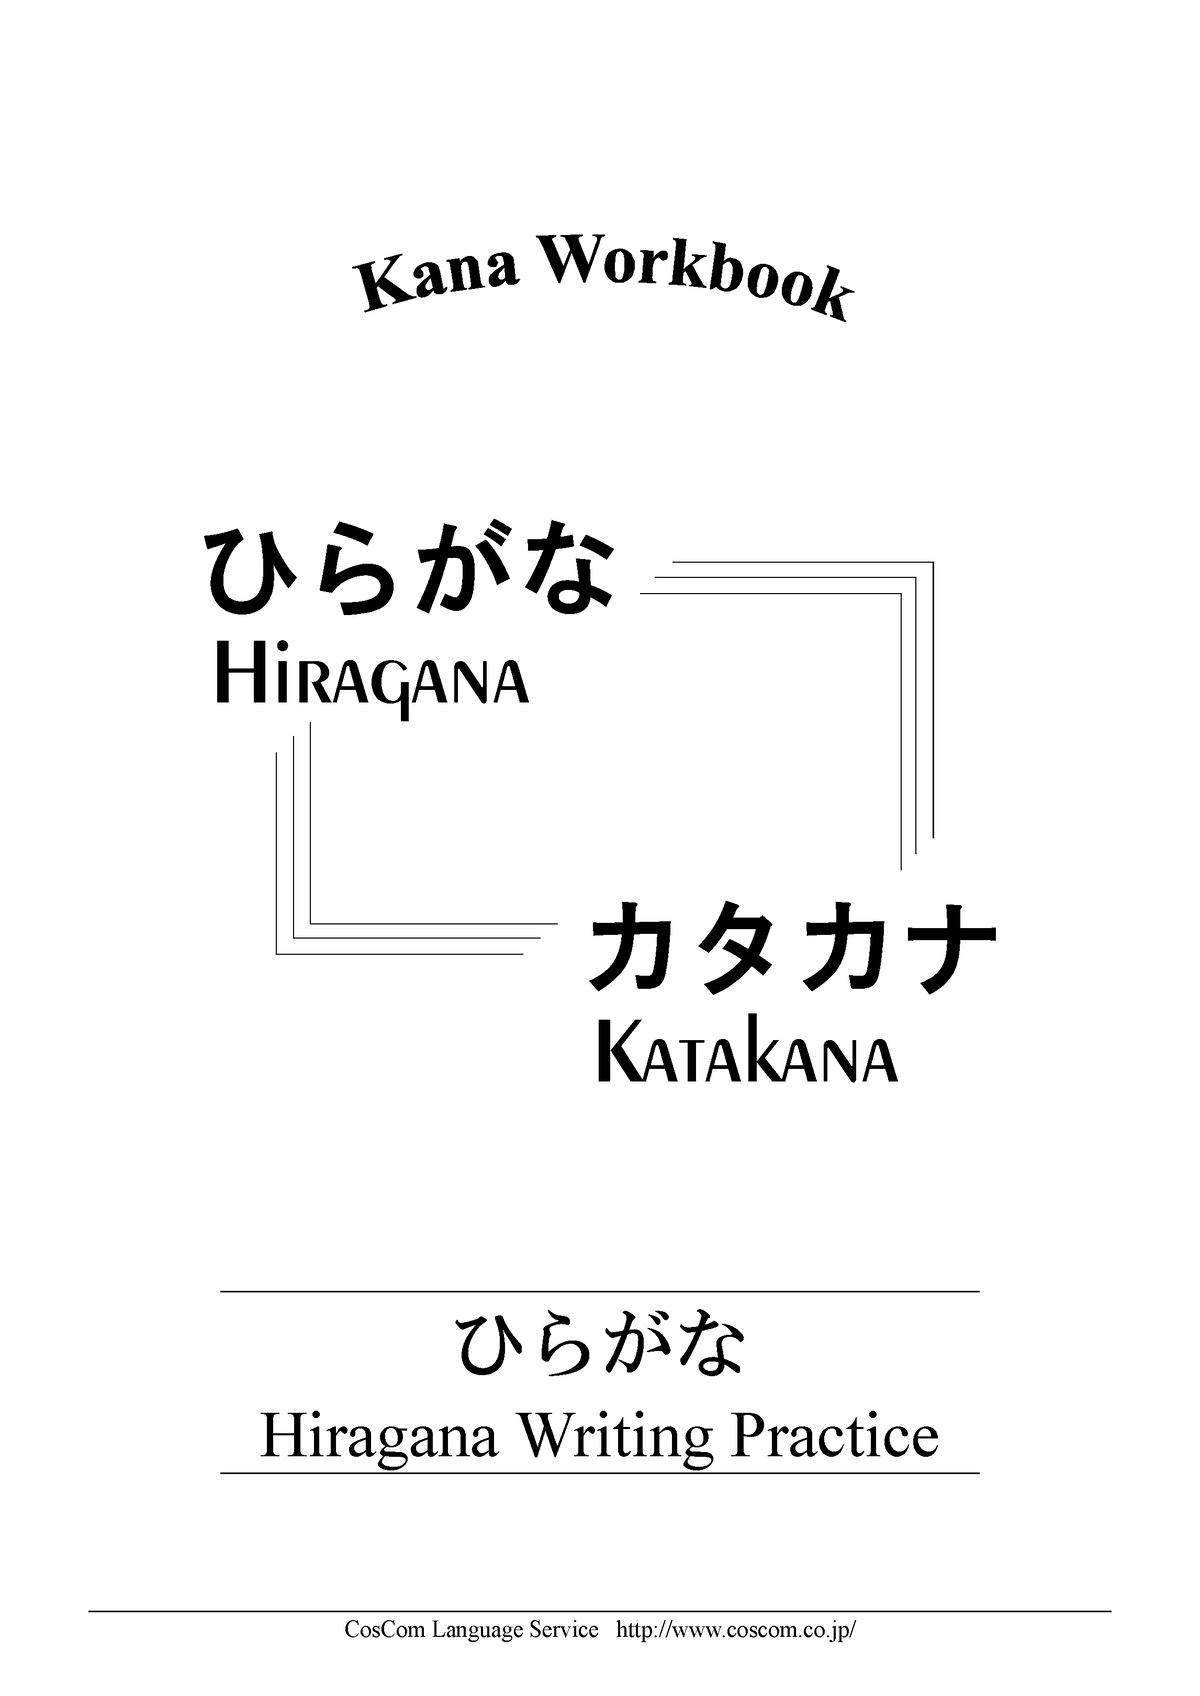 Hiragana Writing Practice - CosCom Language Service coscom.co/ ひらがな ...